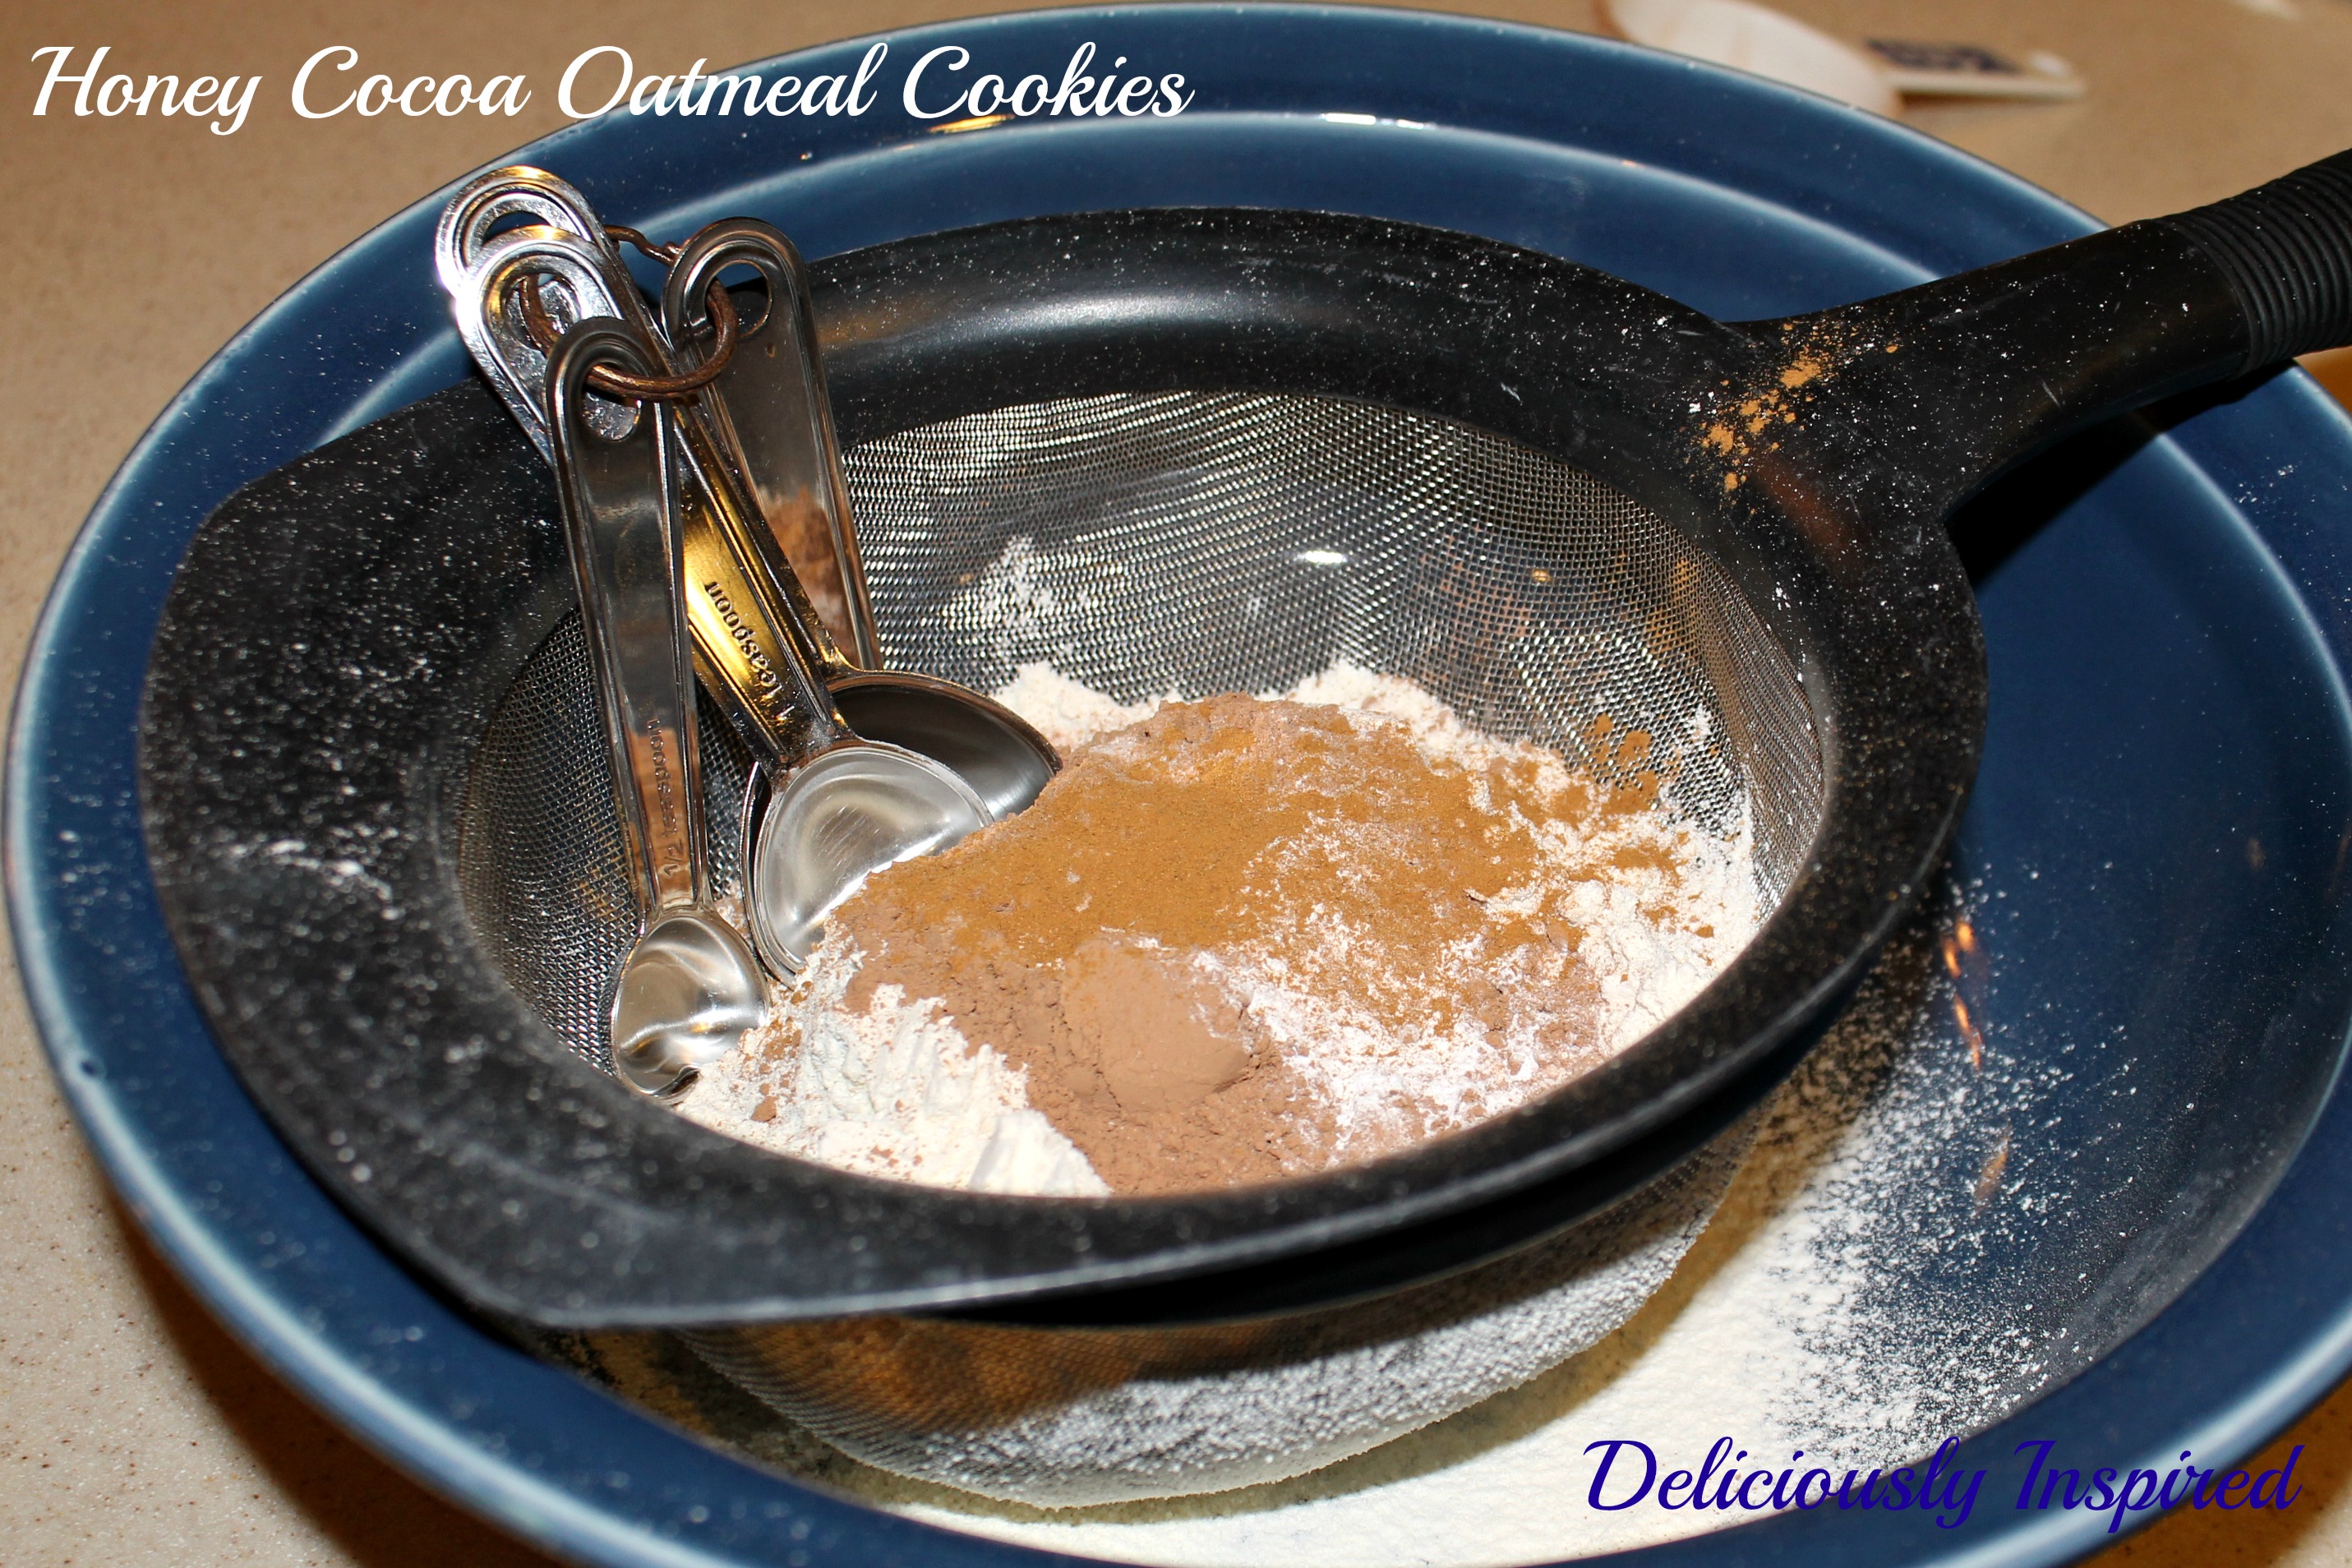 Honey Cocoa Oatmeal Cookies - Dry Ingredients